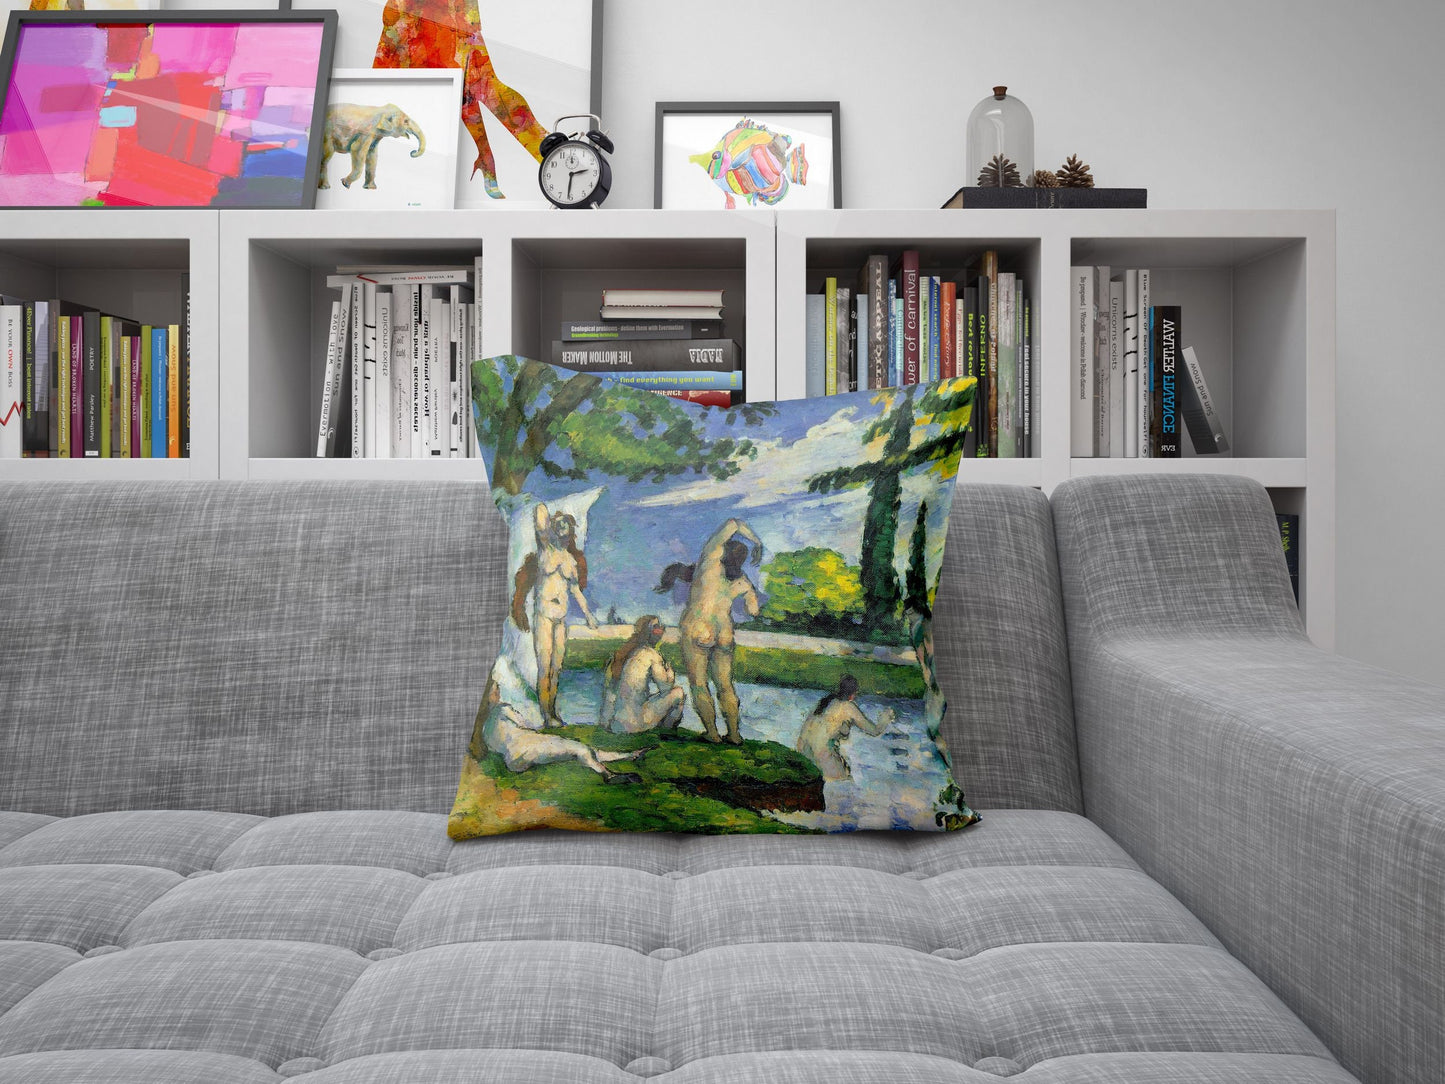 Paul Cezanne Famous Art, Pillow Case, Abstract Pillow, Art Pillow, Green And Yellow, Modern Pillow, Large Pillow Cases, Home Decor Pillow